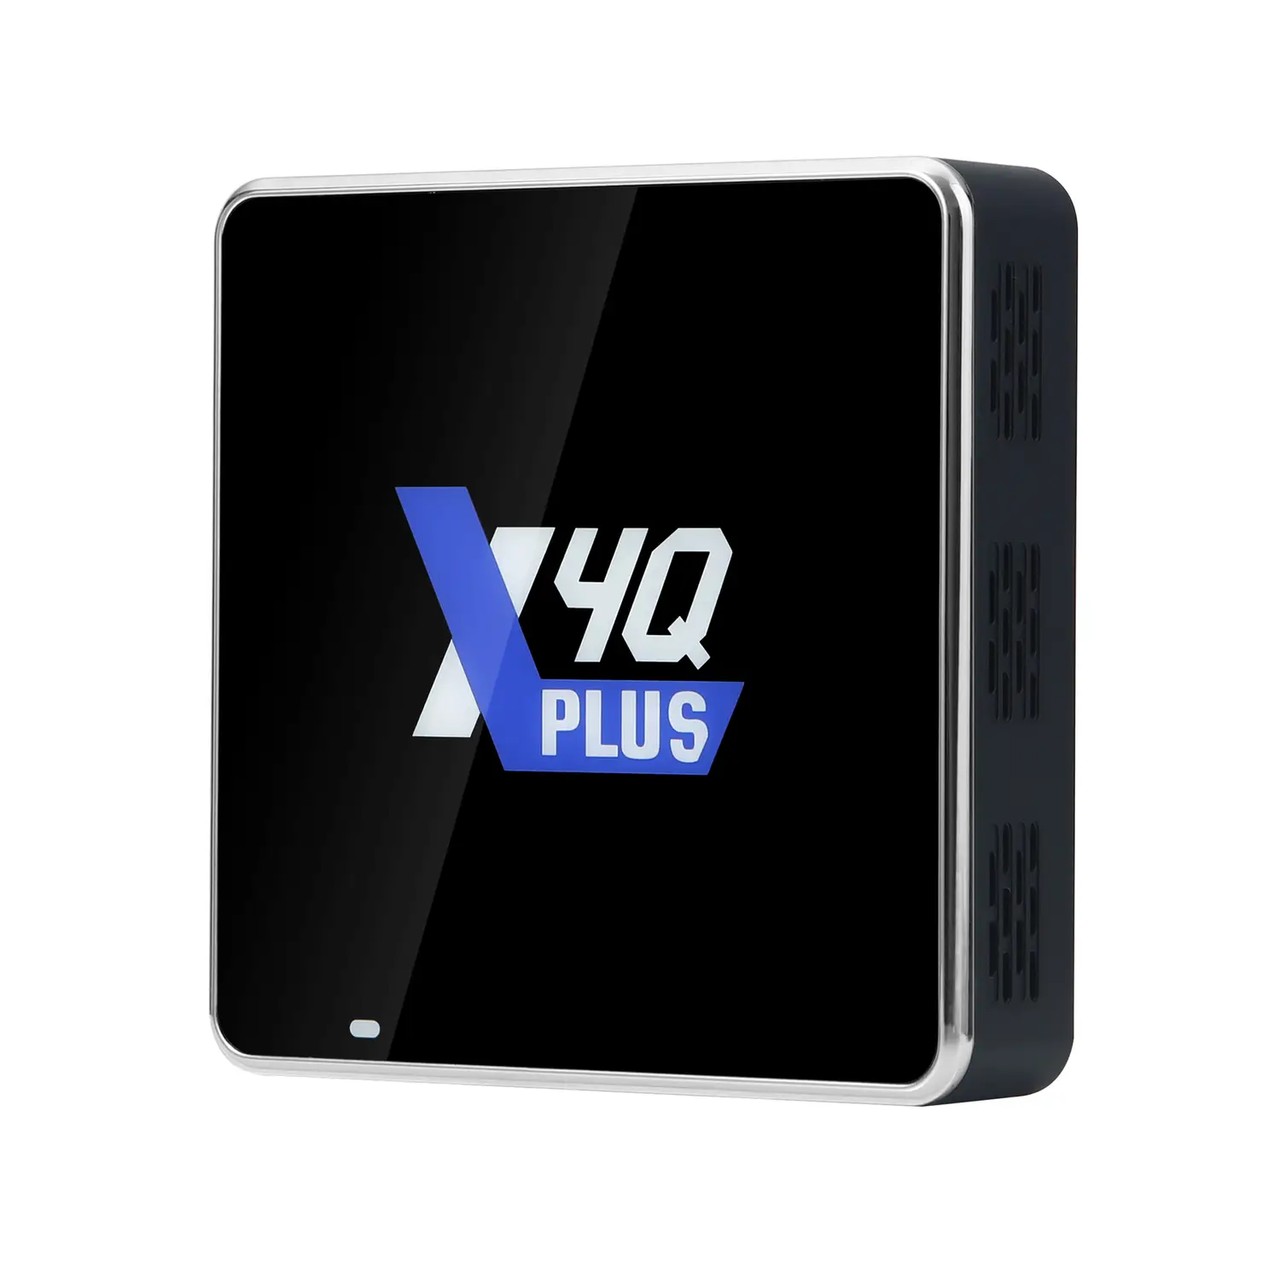 Медиаплеер VONTAR X4 AndroidTV Amlogic S905X4 4/32GB G10BTS Pro